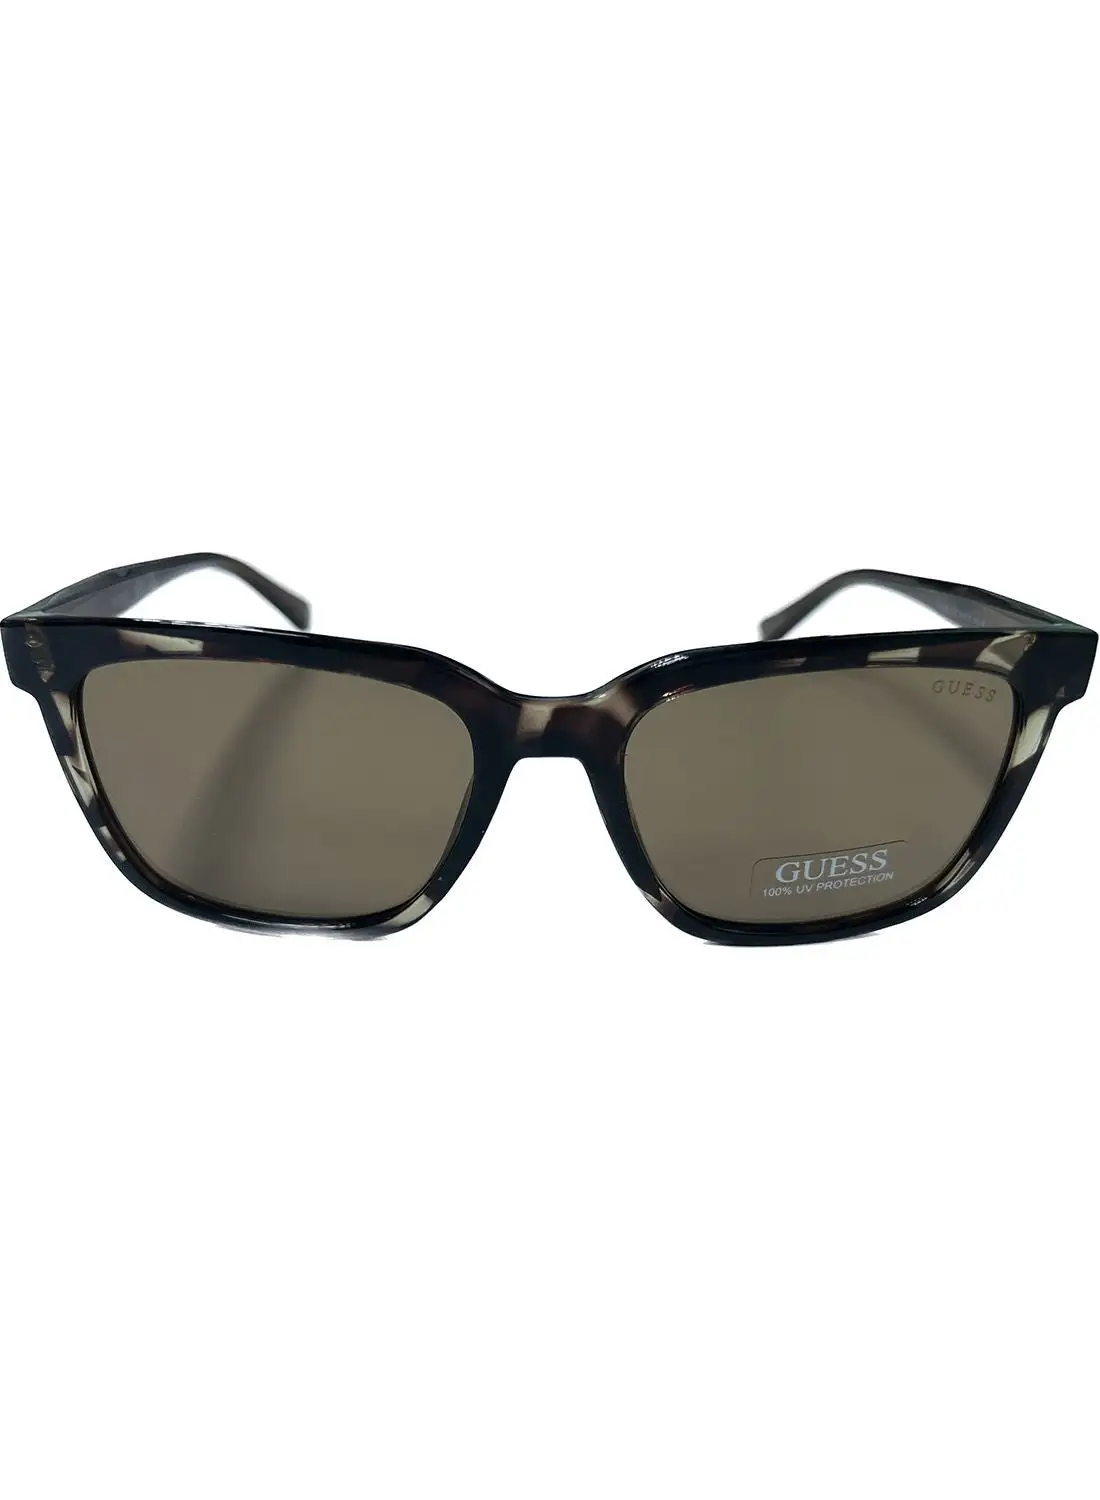 GUESS Men's Square Sunglasses - GU0005053E54 - Lens Size: 54 Mm